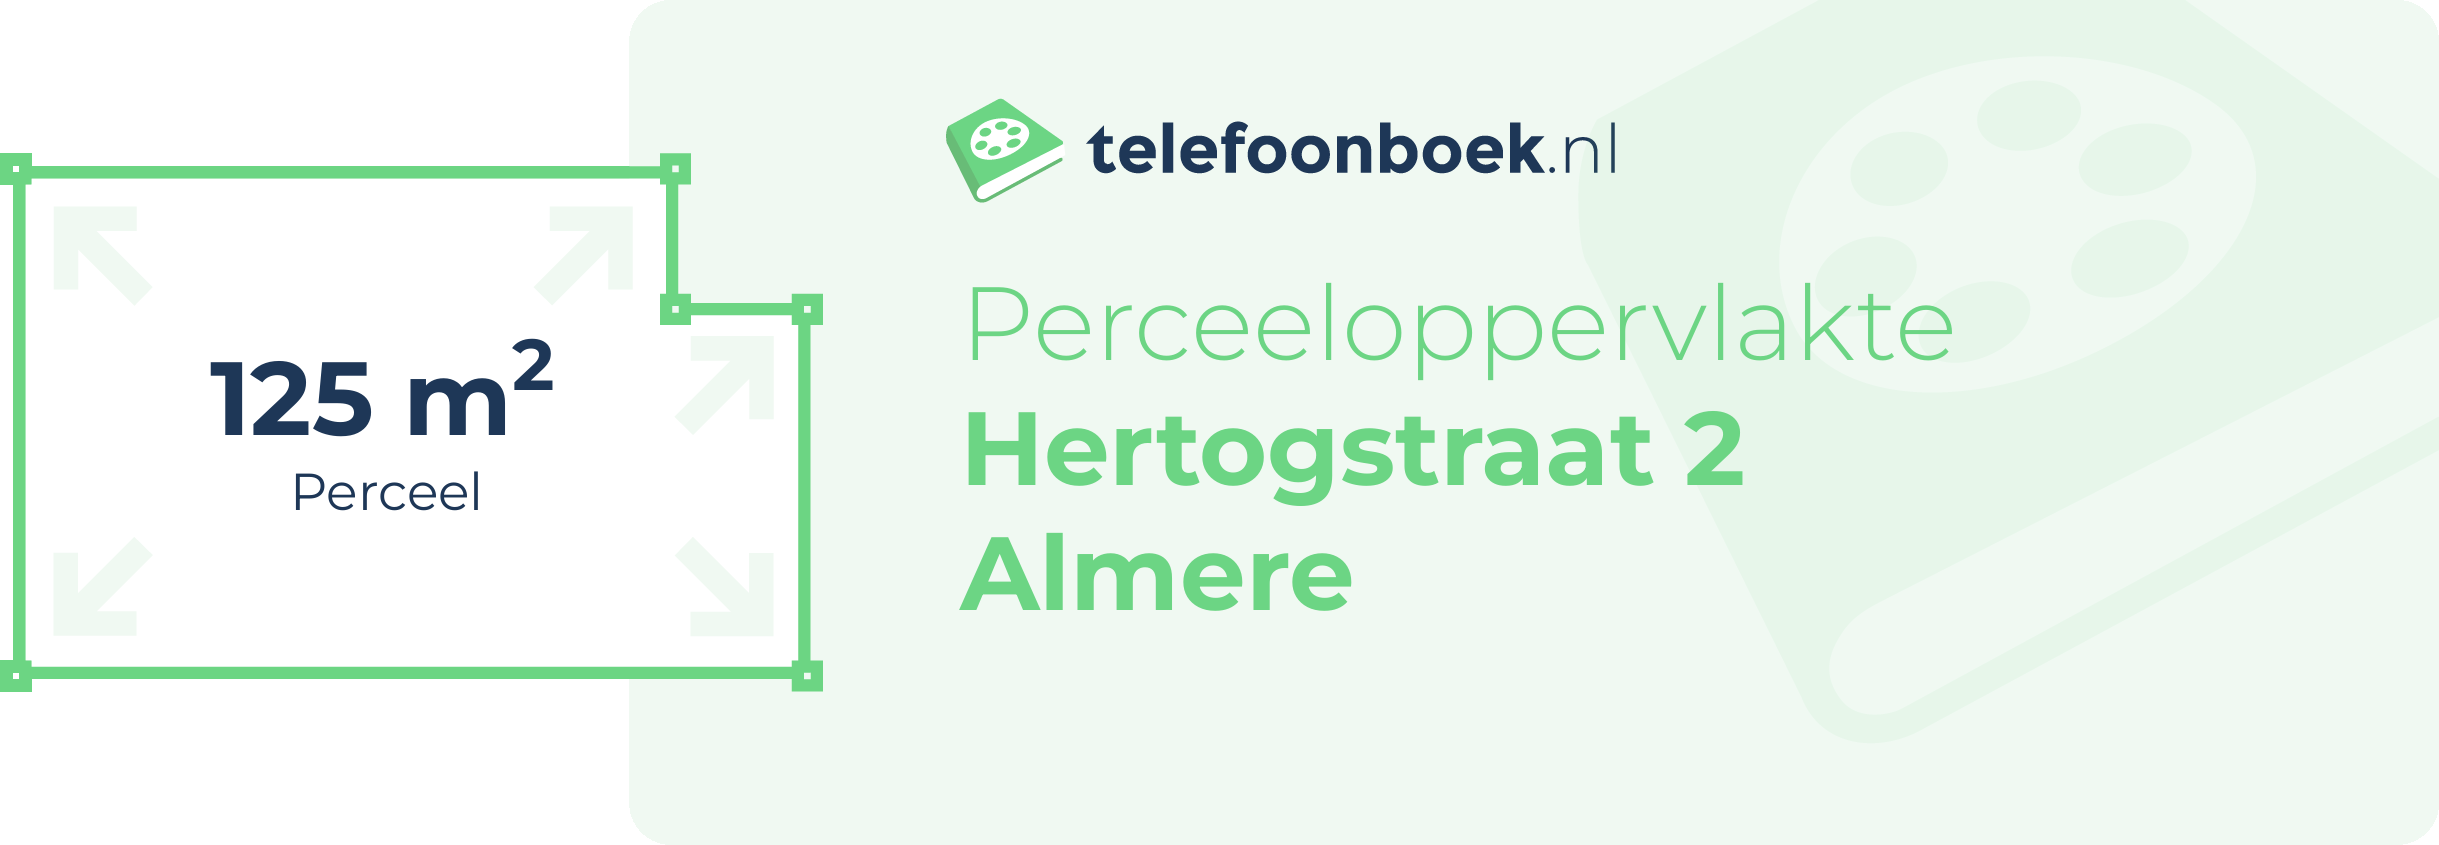 Perceeloppervlakte Hertogstraat 2 Almere